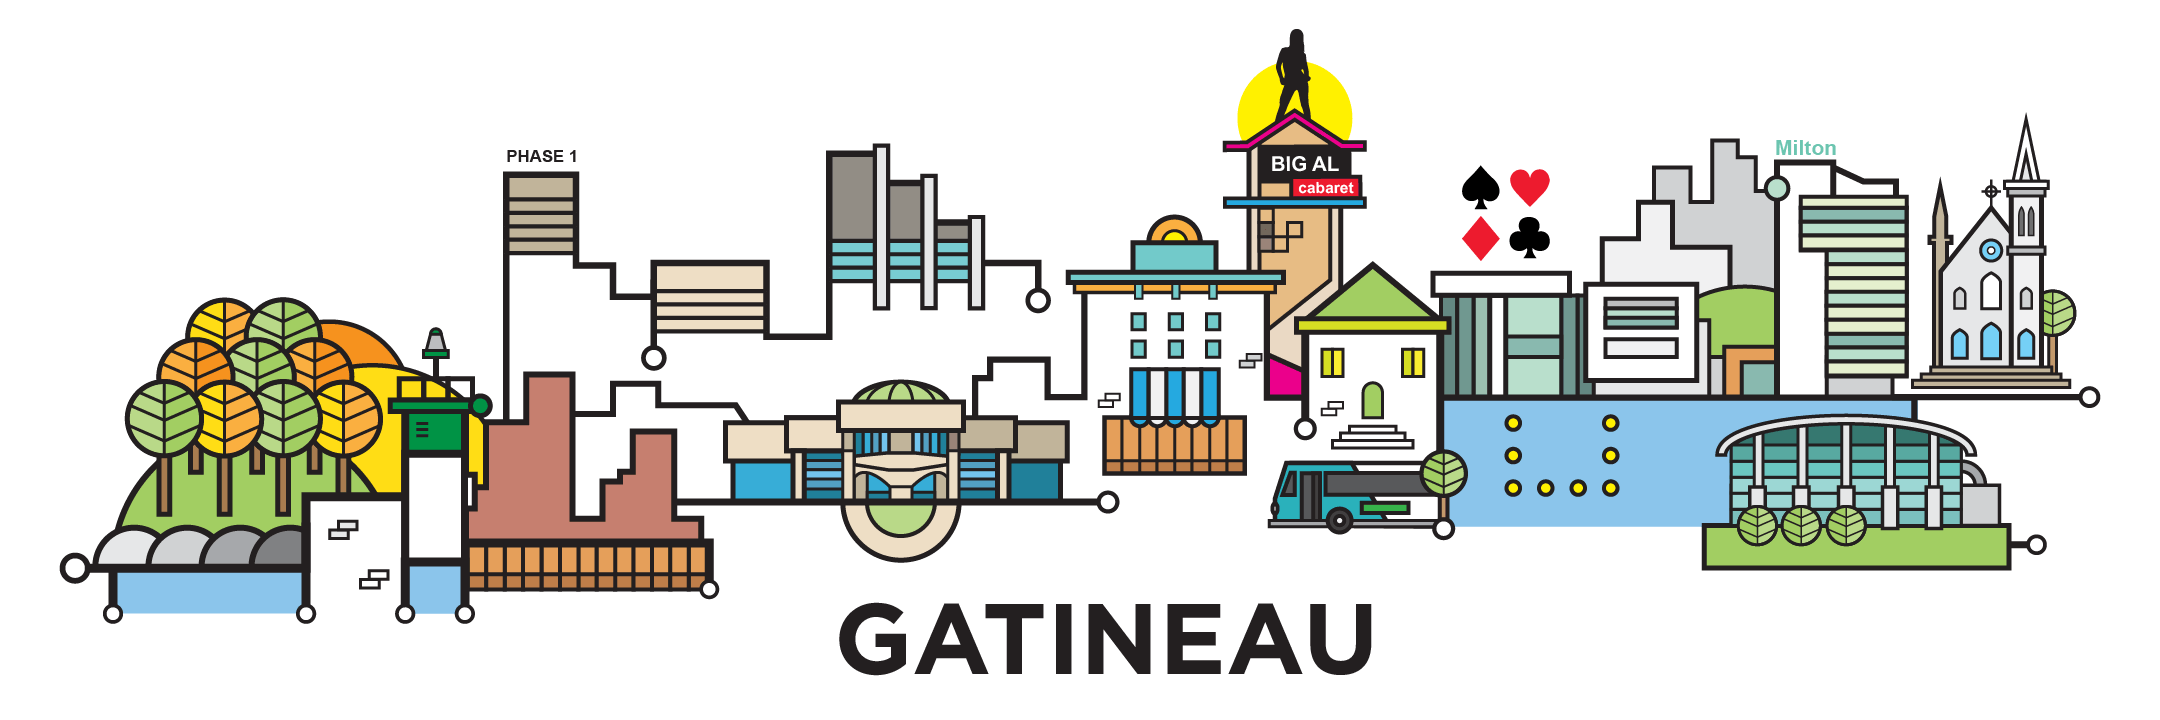 gatineau-cityline-illustration-by-loogart